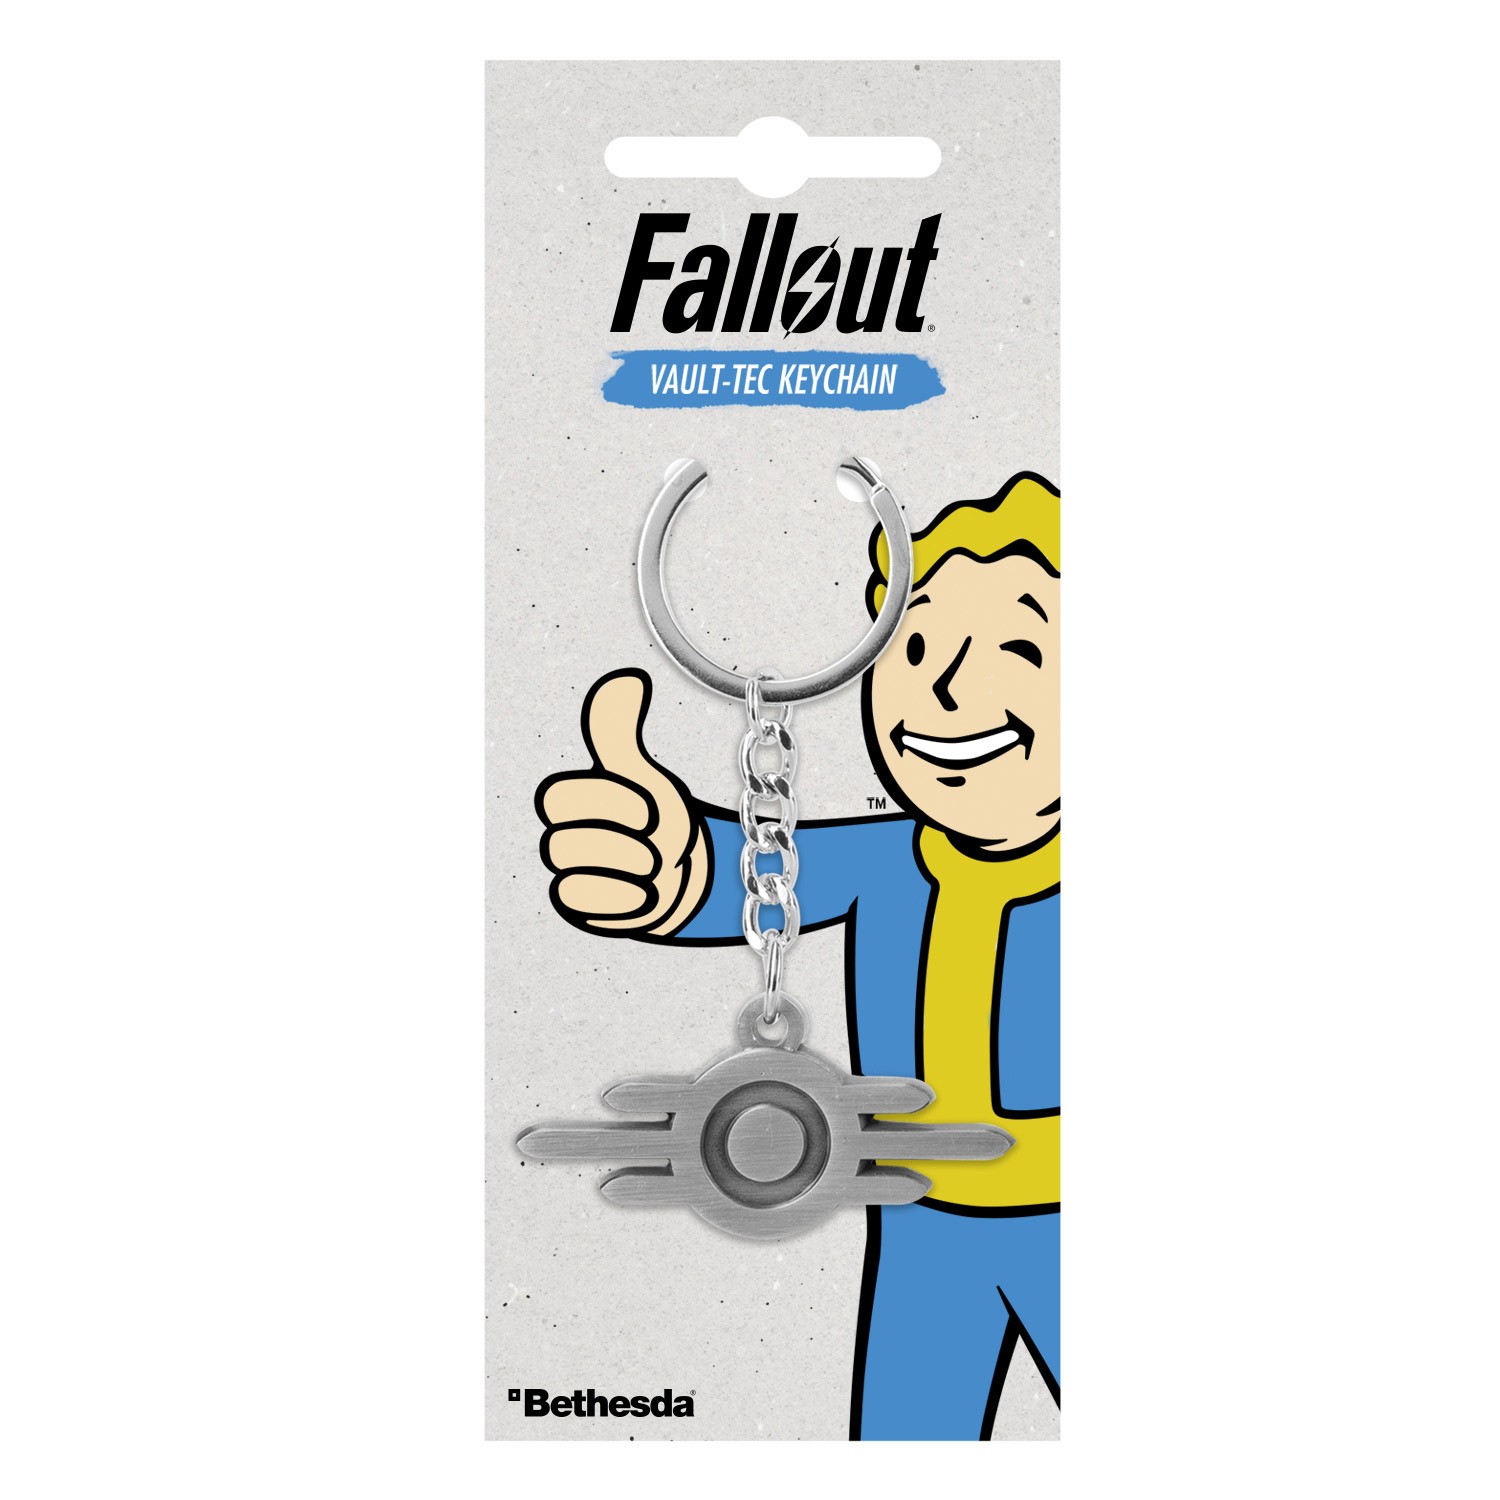 Fallout "Vault-Tec" võtmehoidja